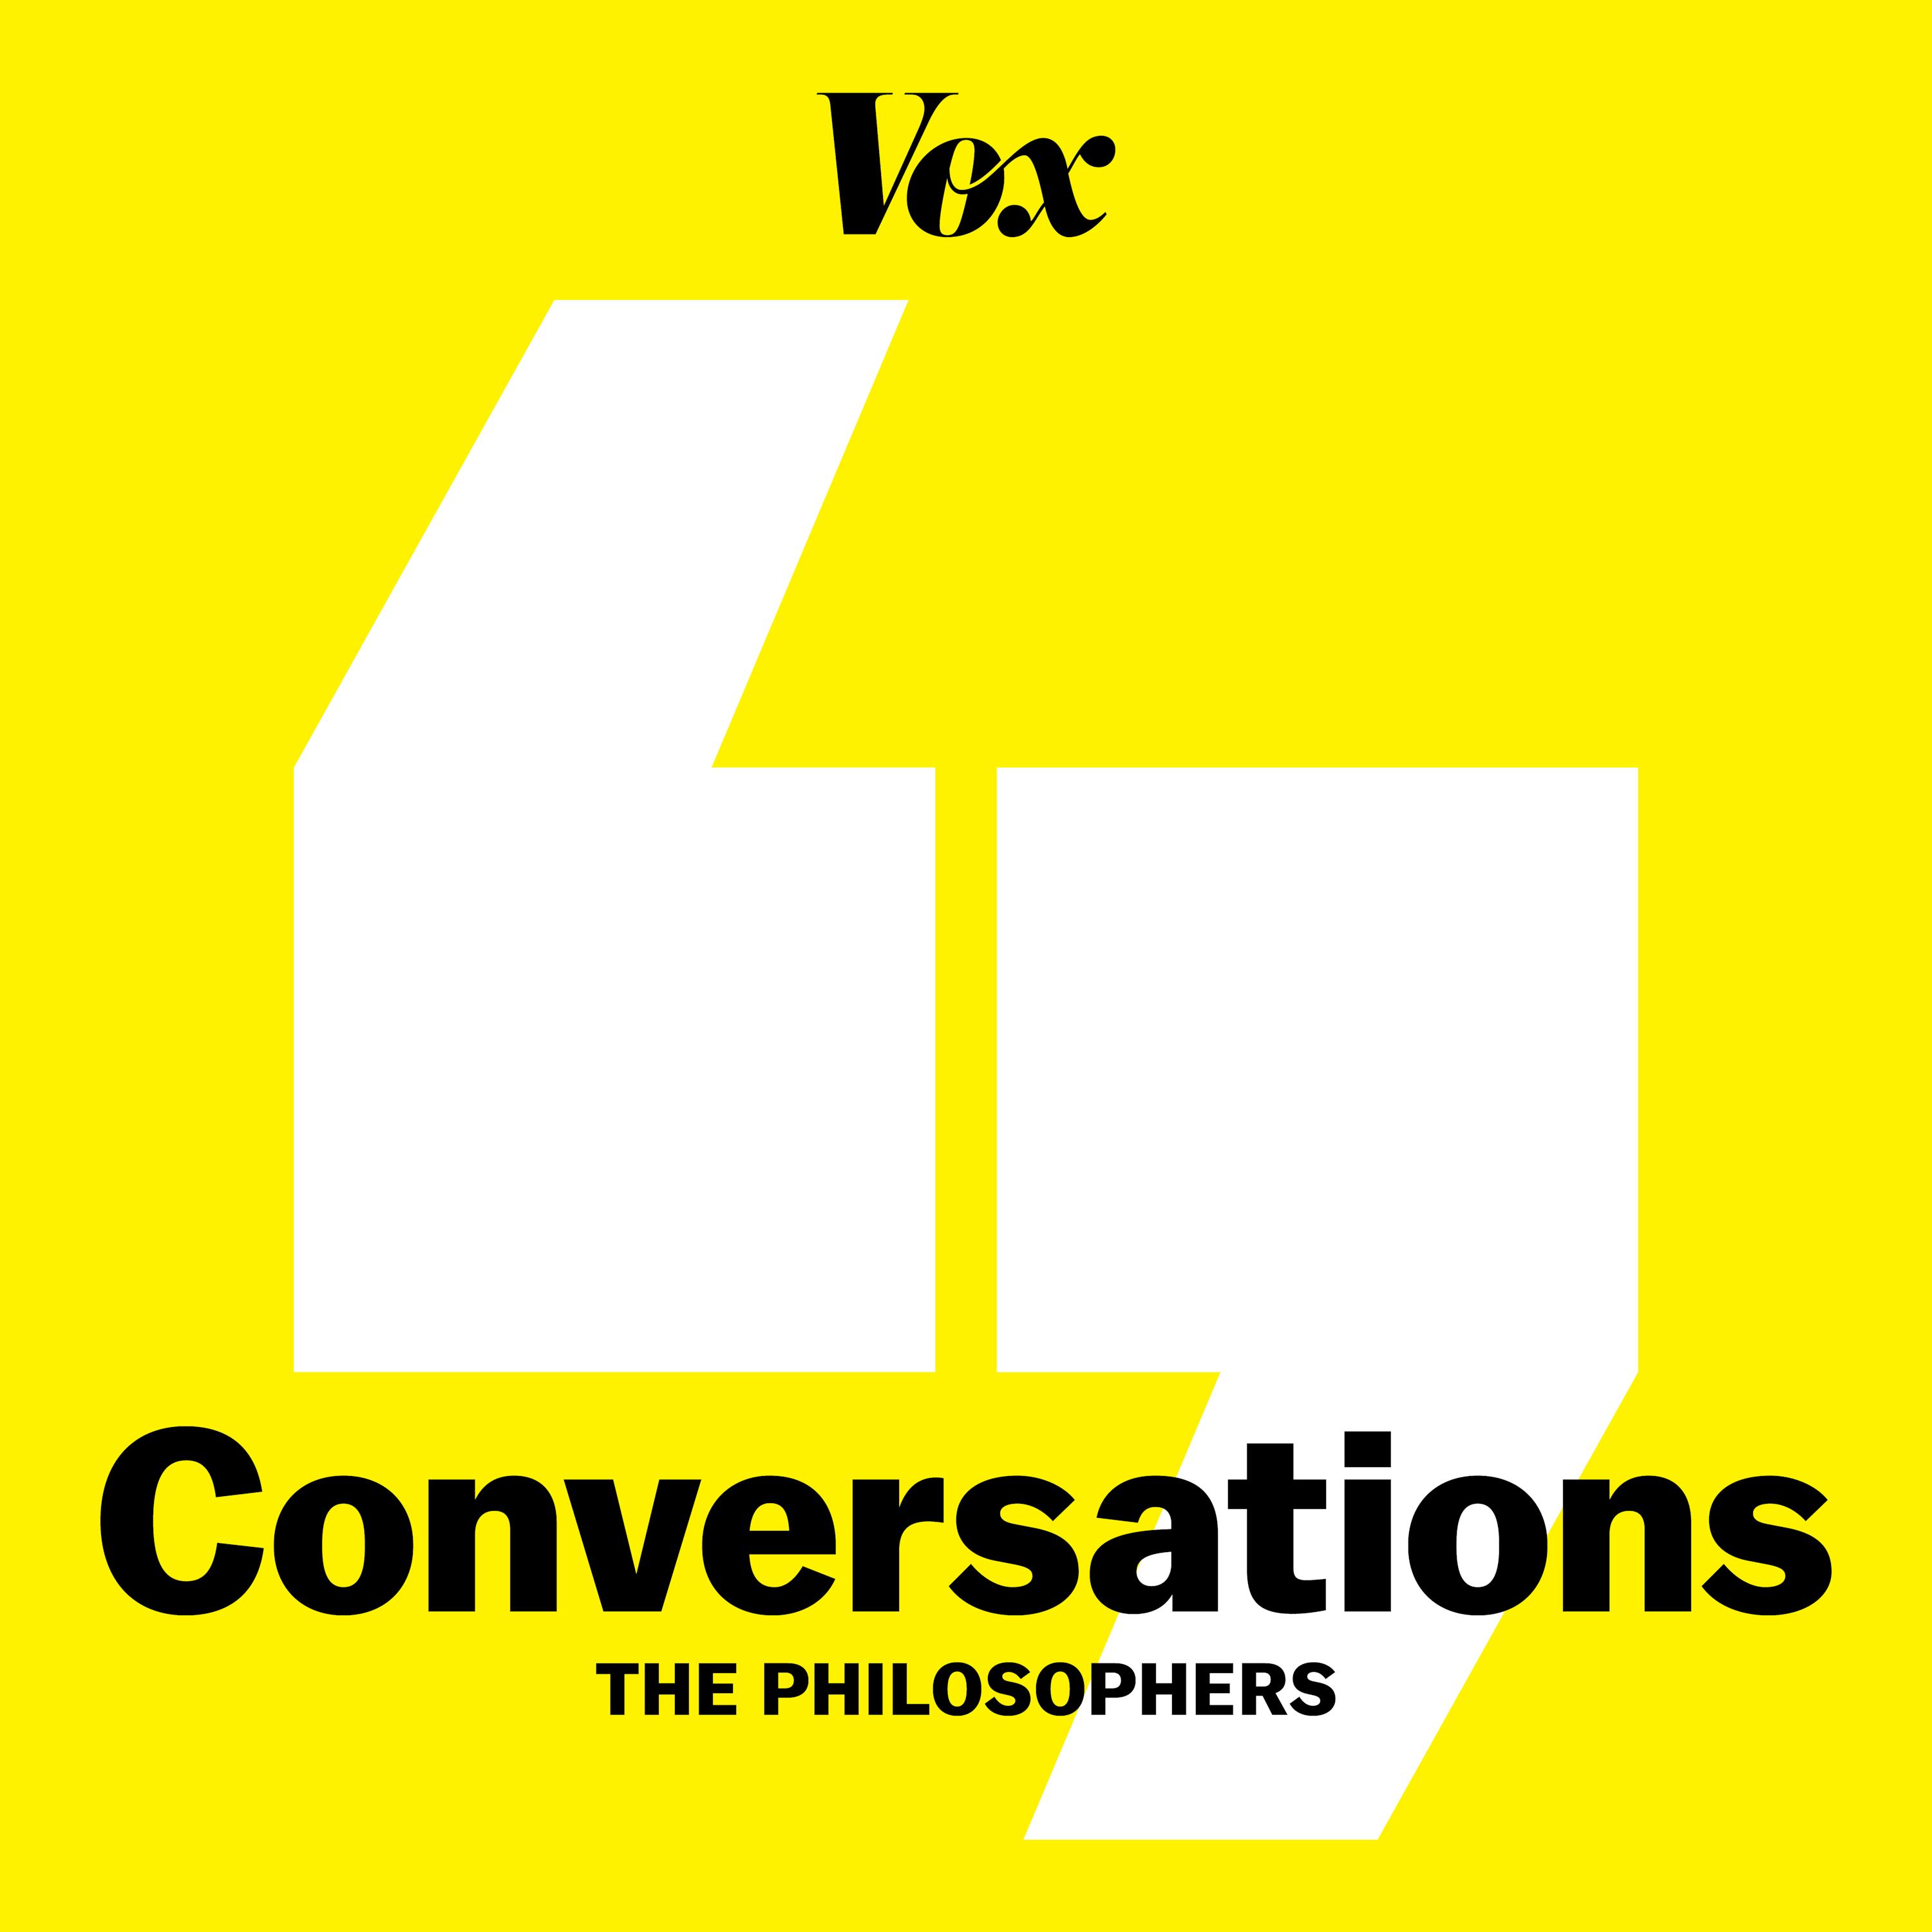 The Philosophers: America’s philosophy, with Cornel West